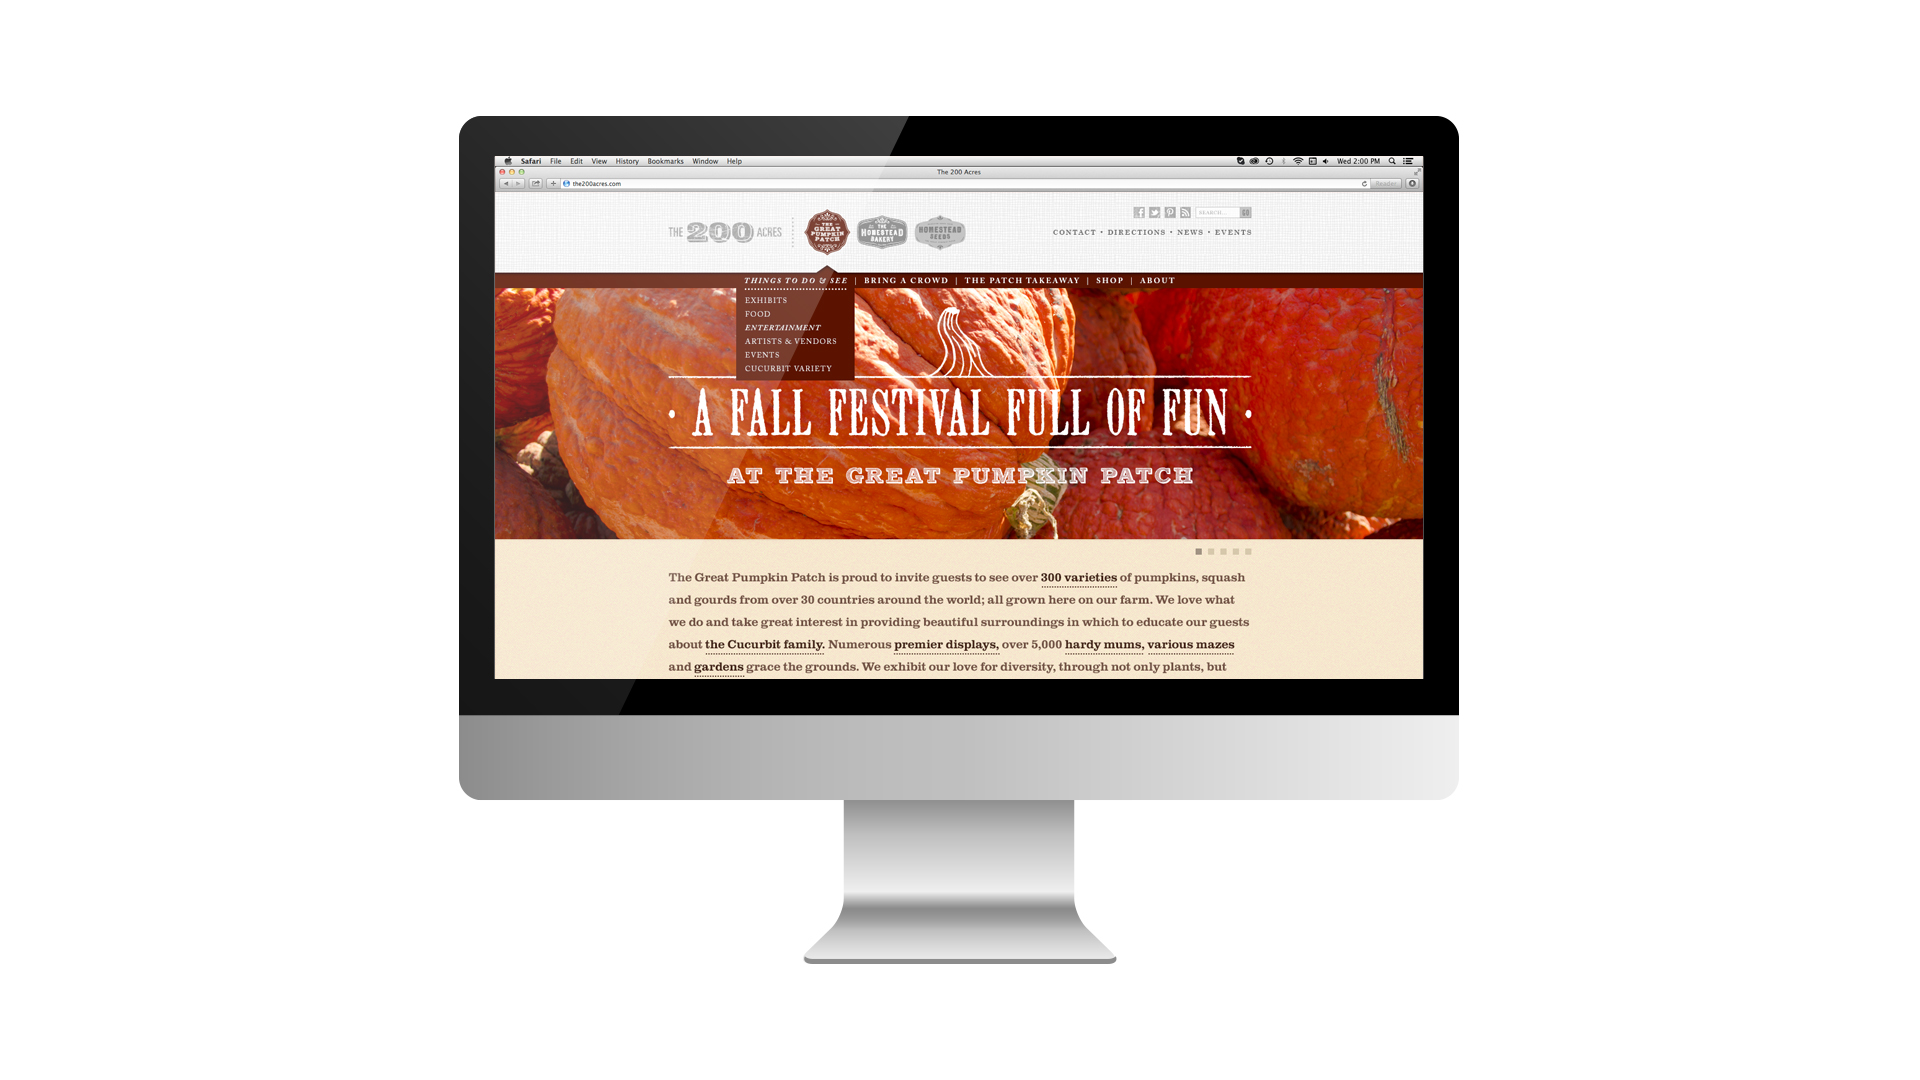 The Great Pumpkin Patch - Arthur, Illinois - Website